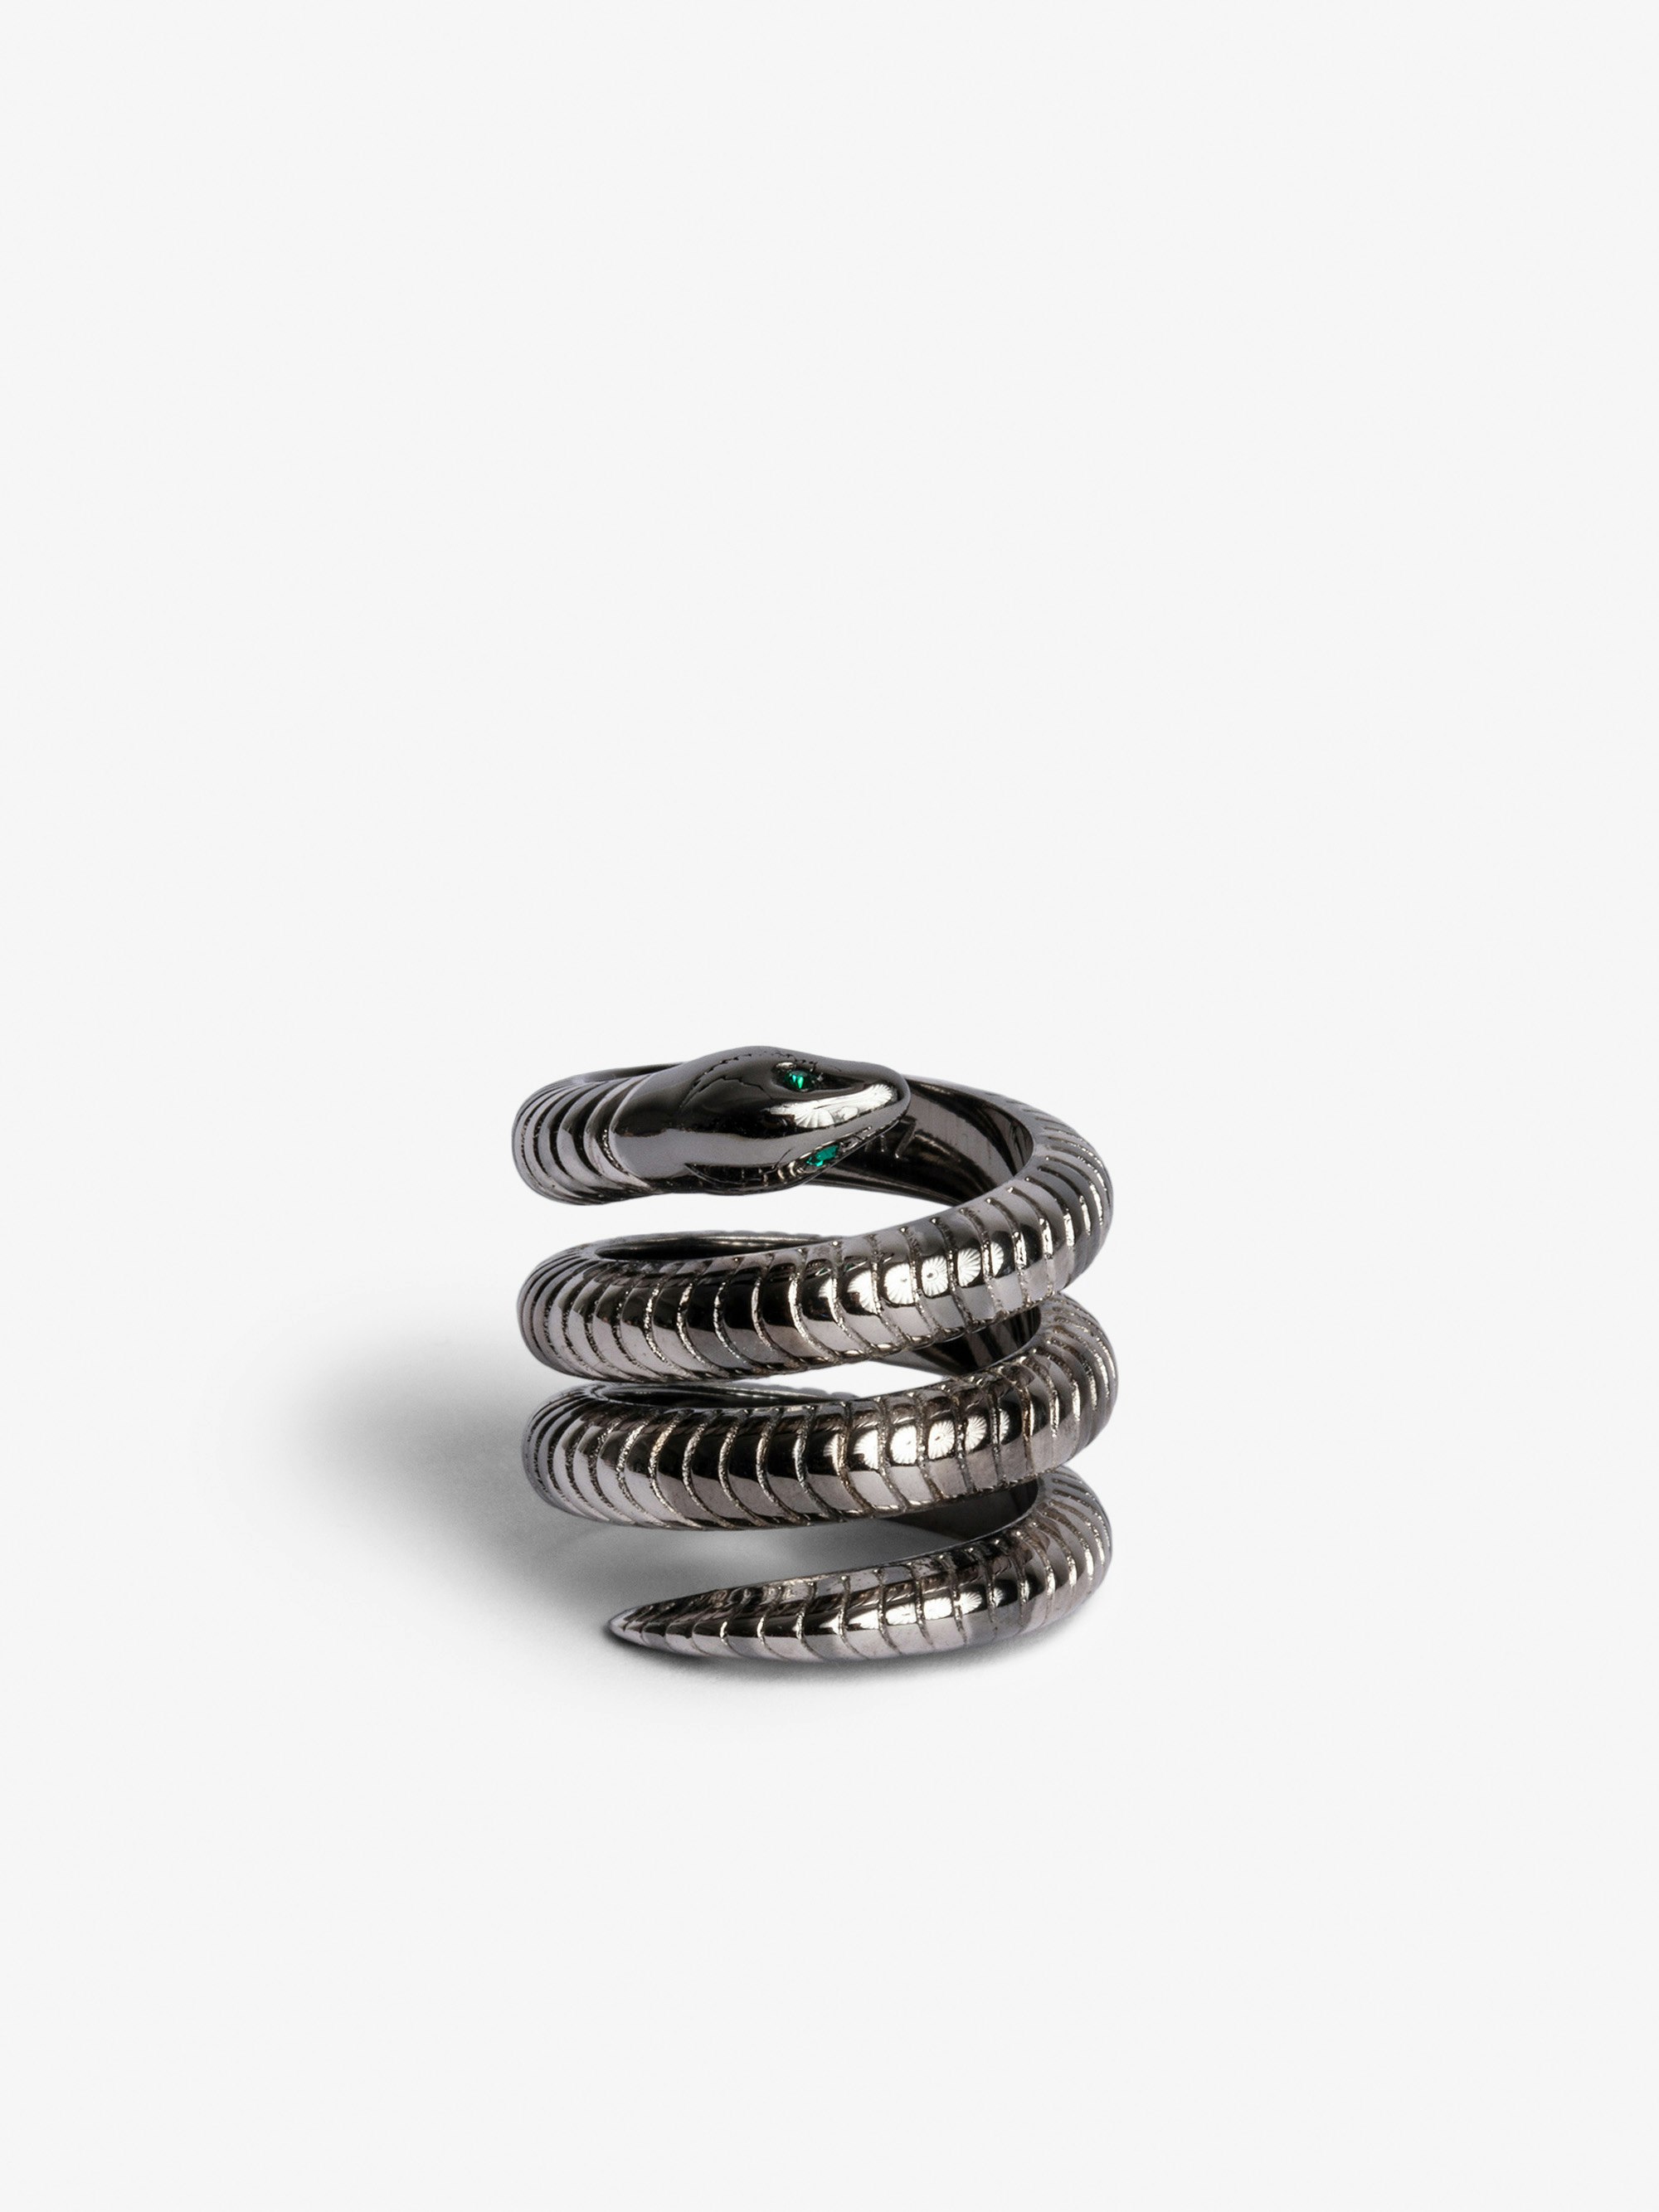 Ring Double Snake - Ring mit Doppel-Schlange aus silberfarbenem Messingring.